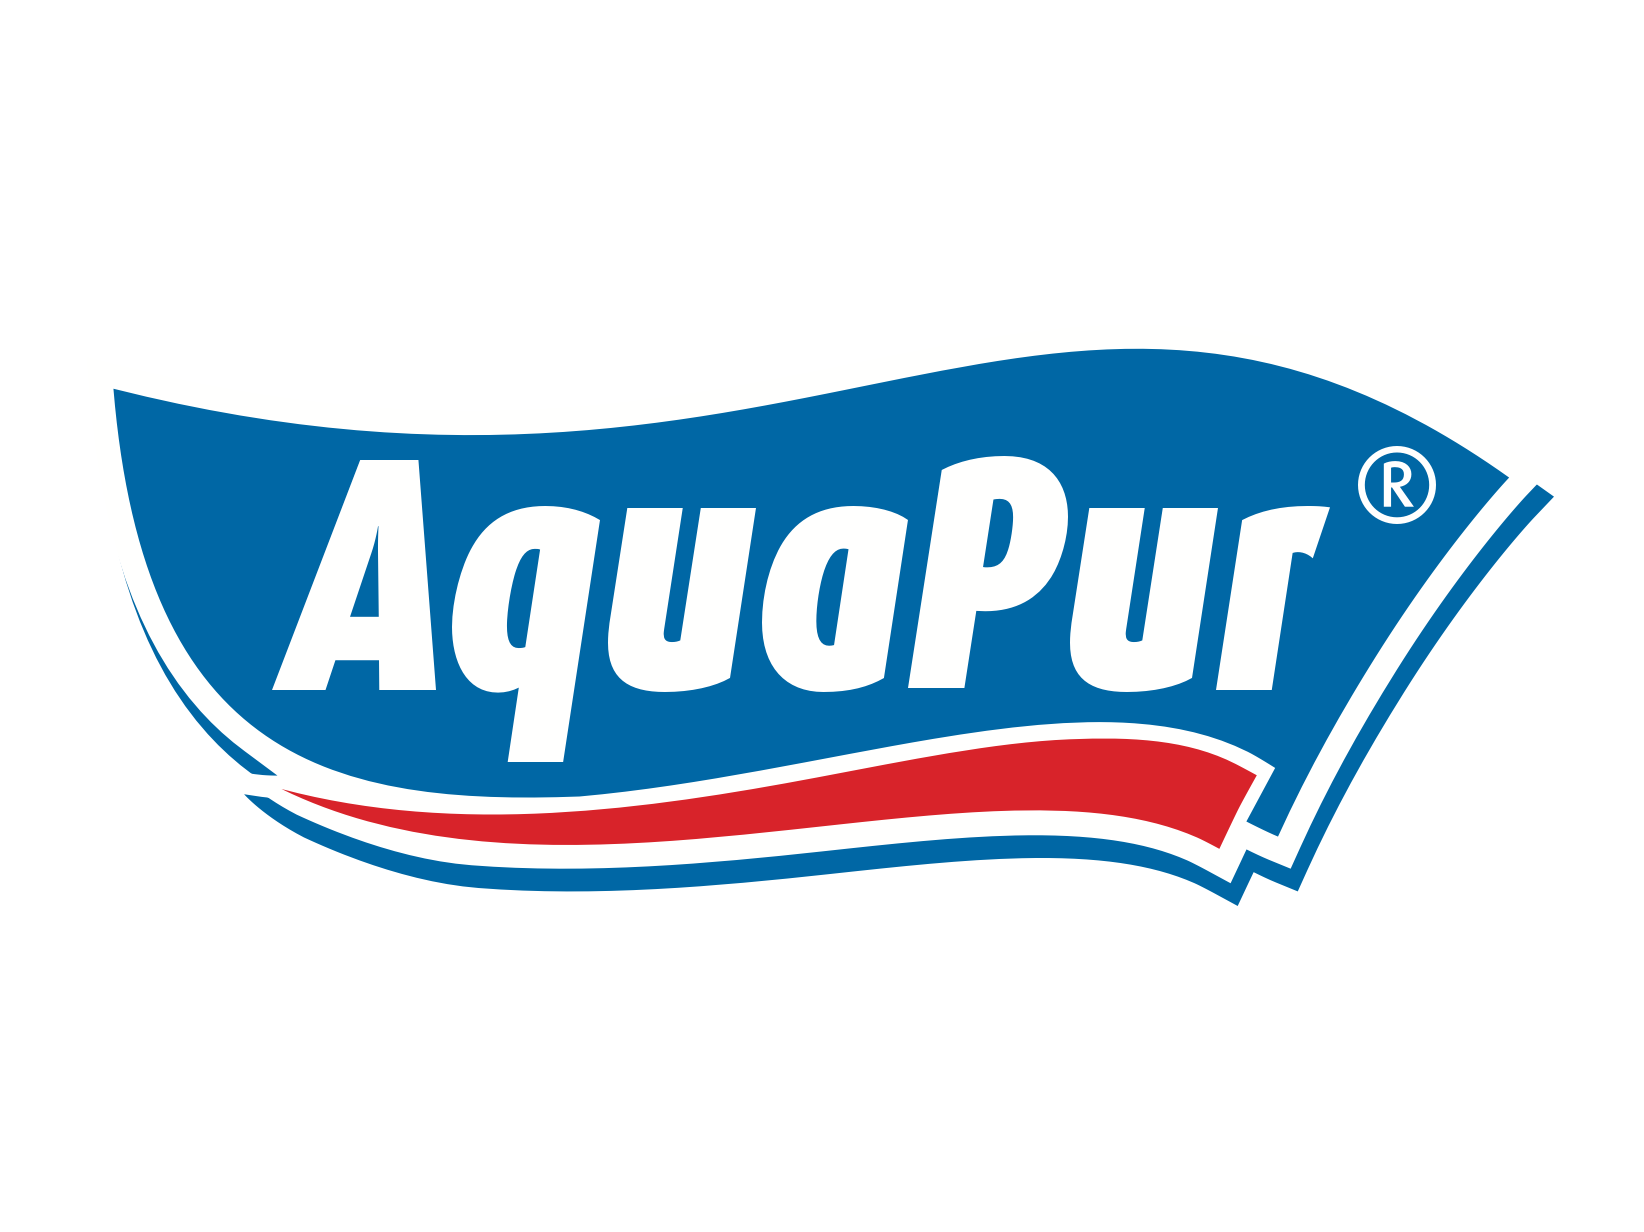 Aquapur